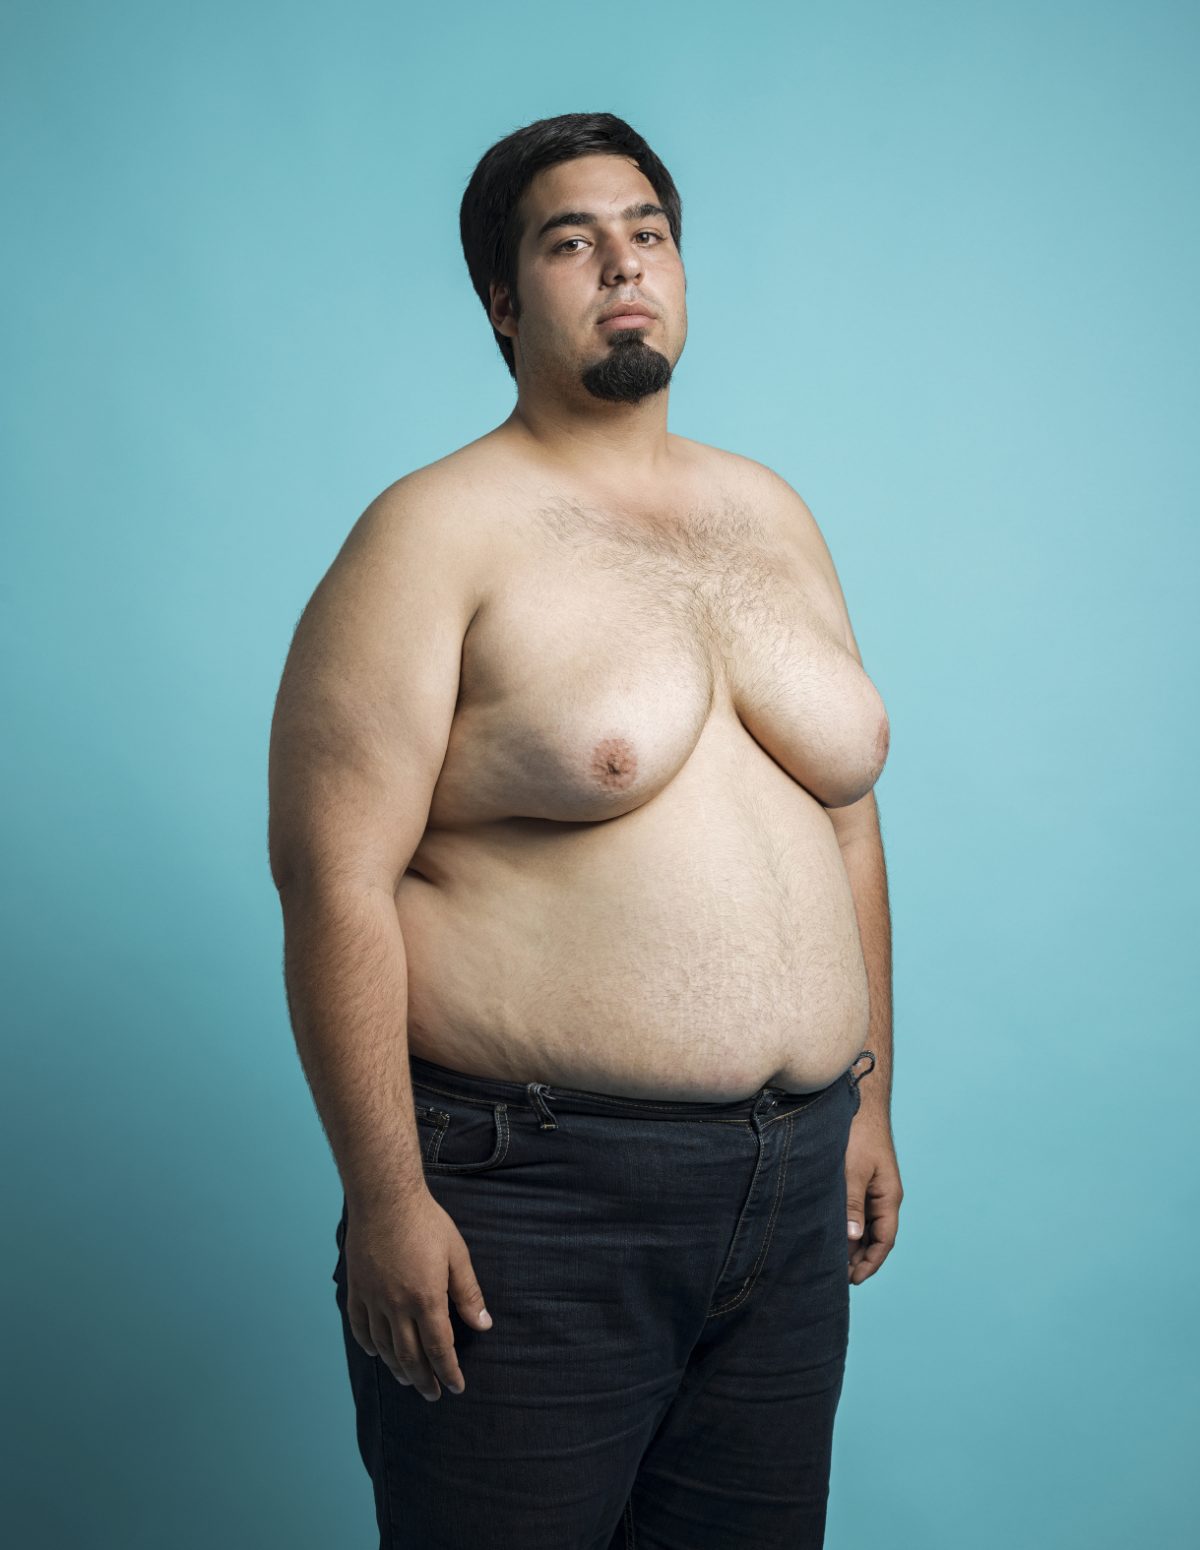 широкая грудь у мужчин фото 88